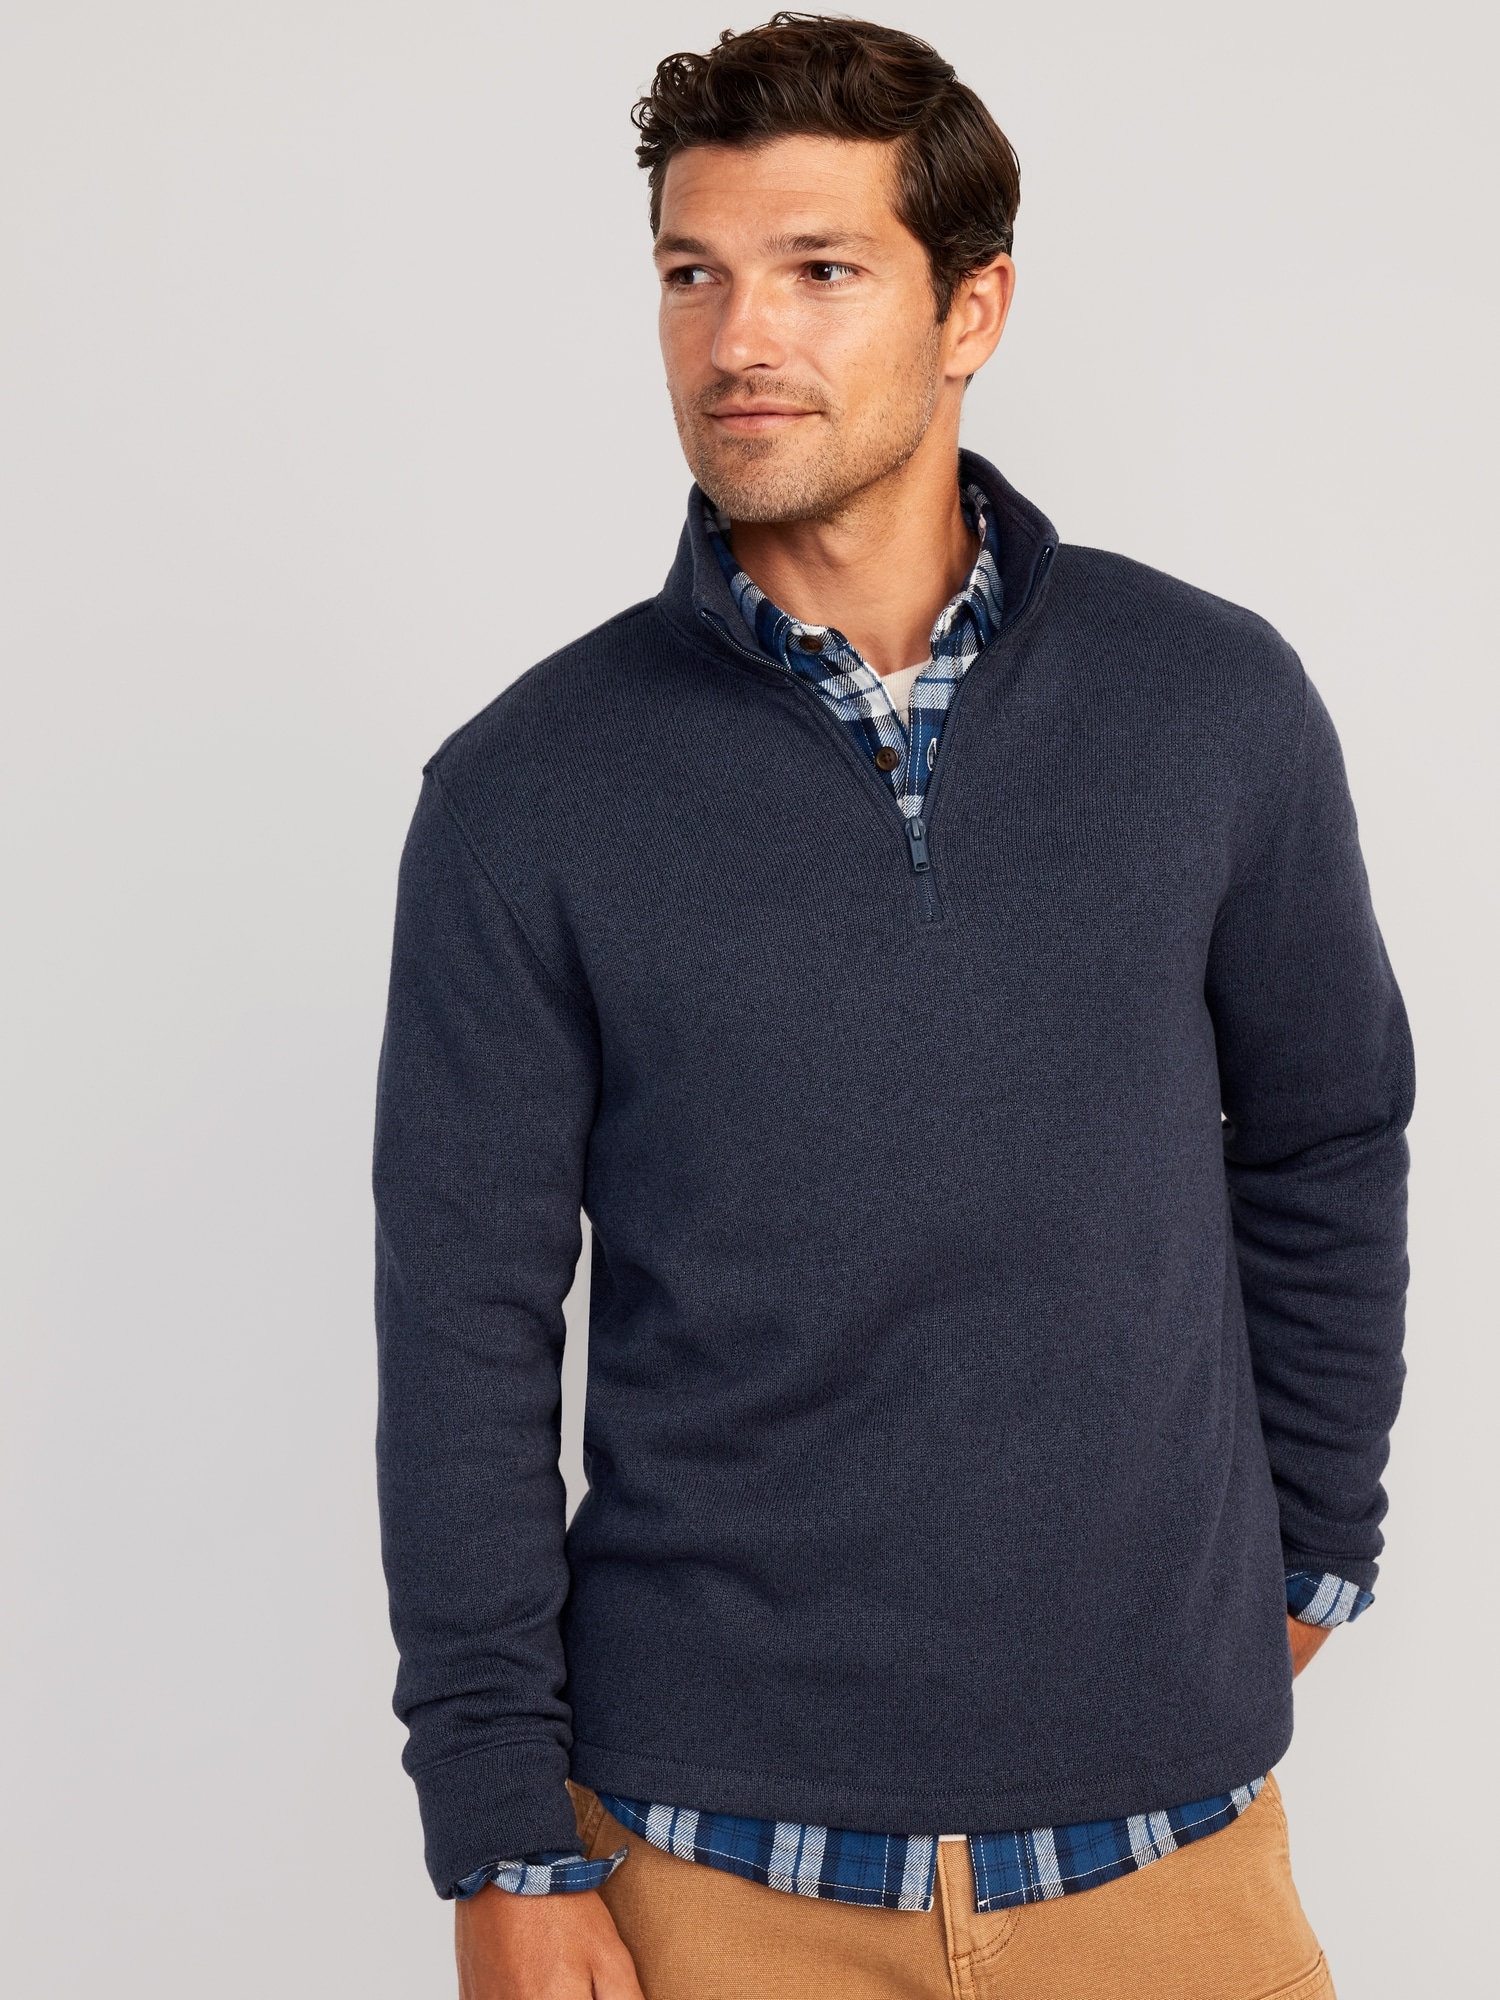 Sweater-Knit Quarter Zip | Old Navy